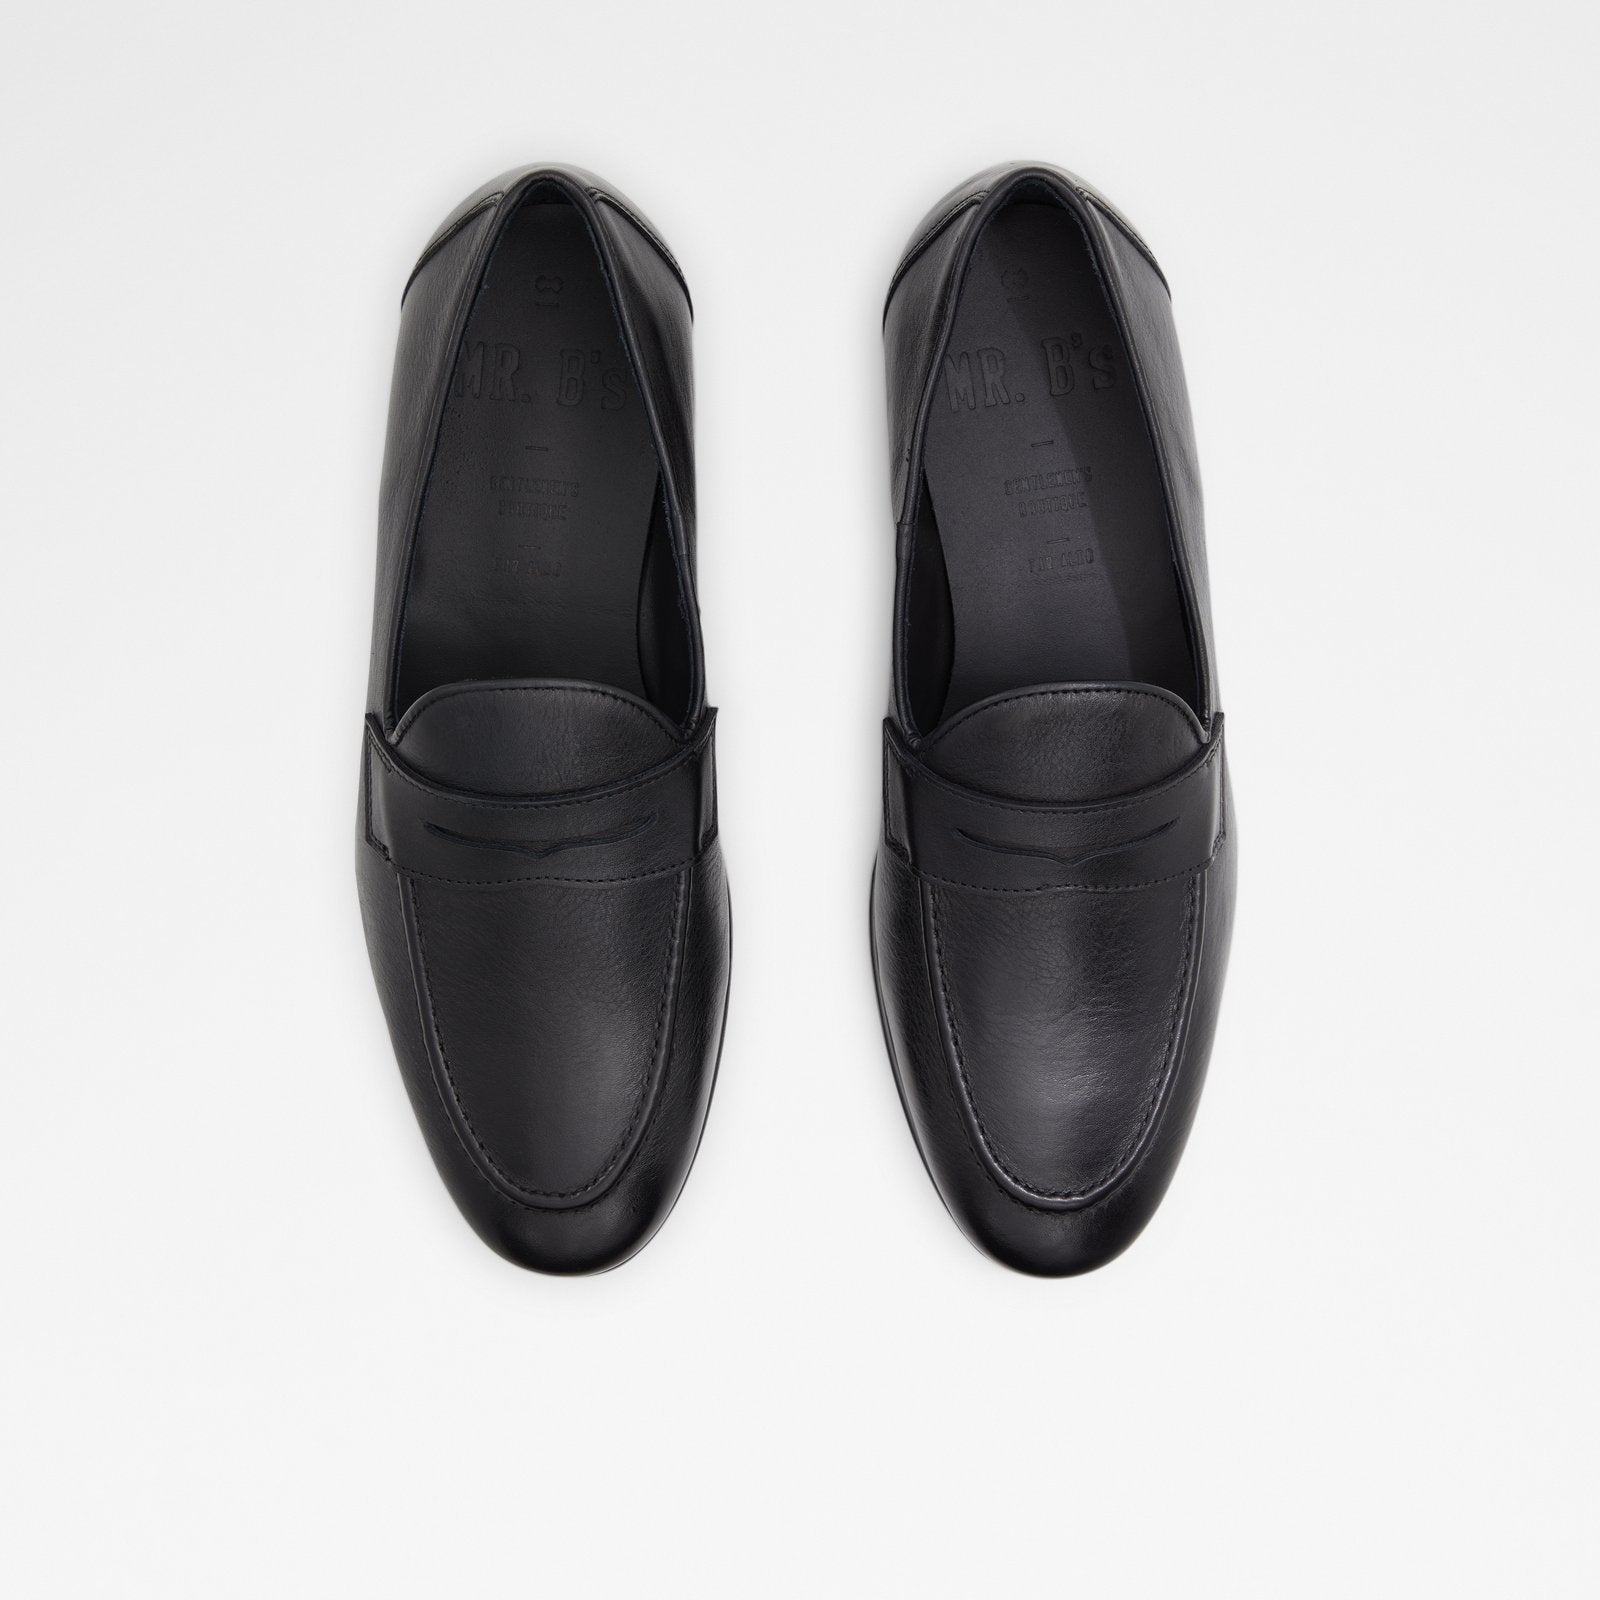 Zouk Men Shoes - Black - ALDO KSA